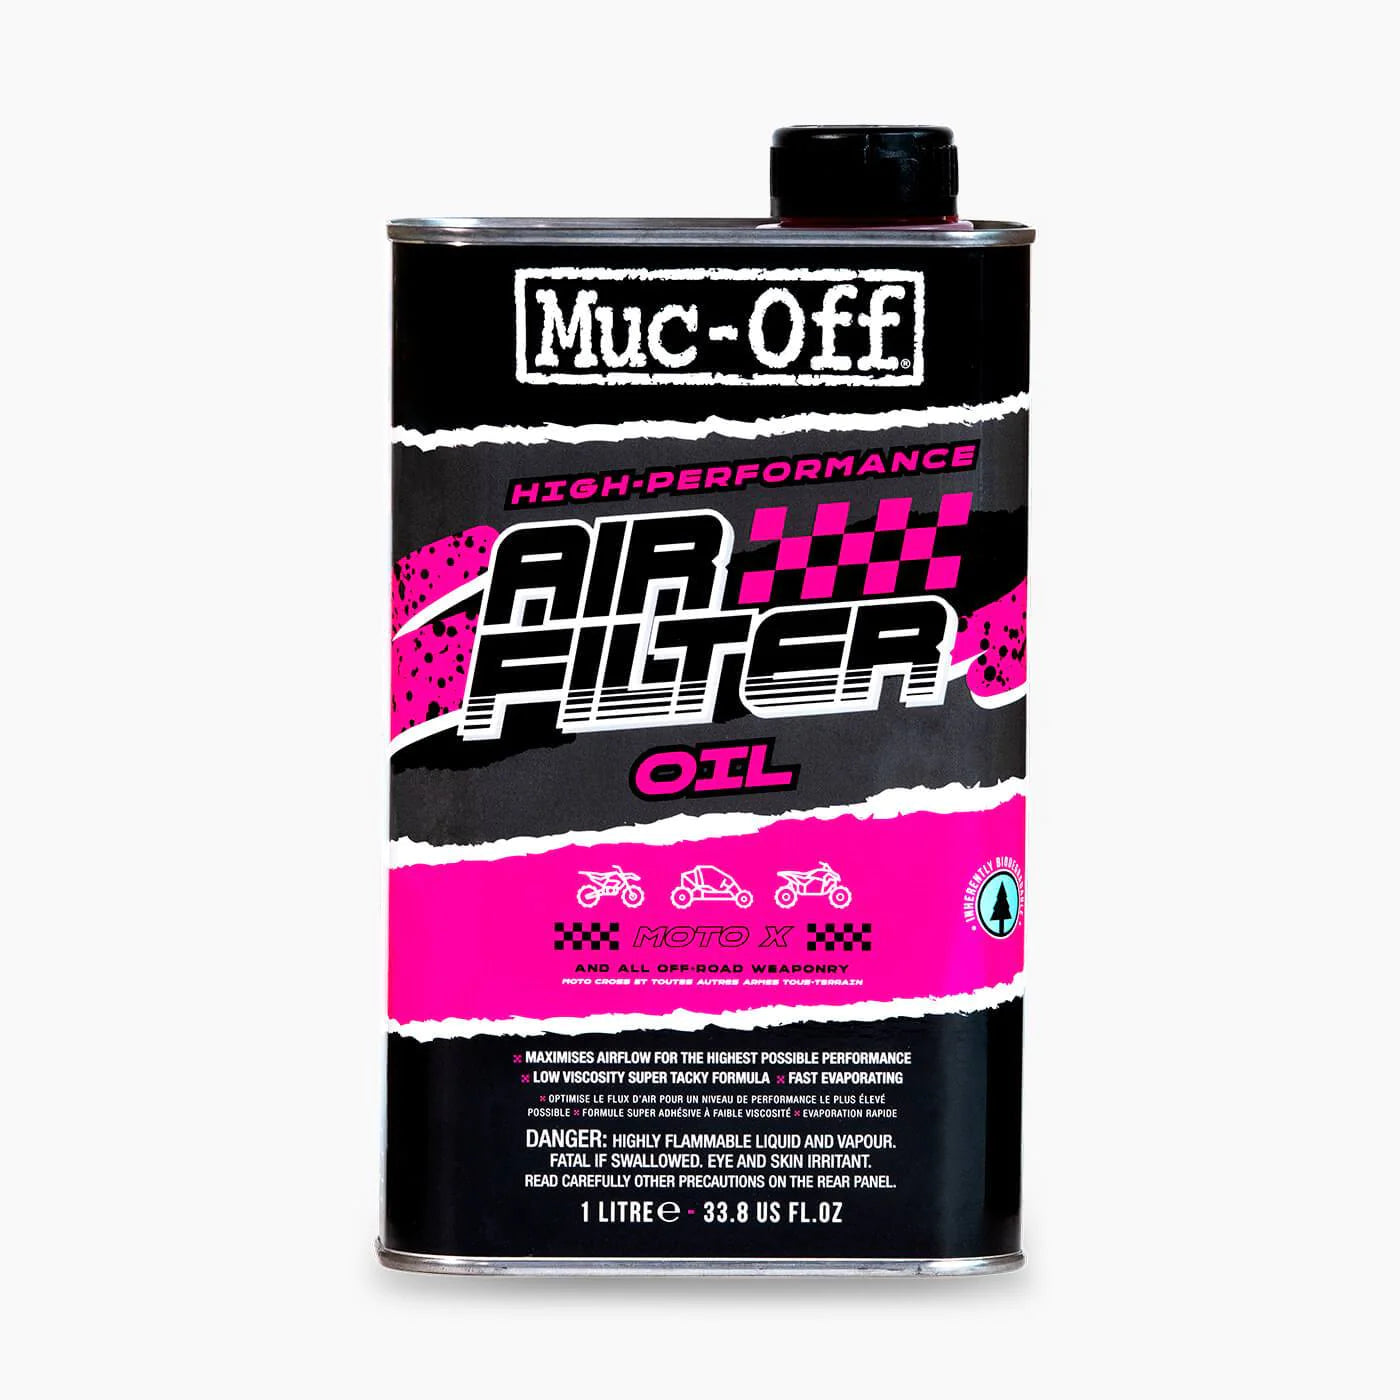 Muc-off Air Filter Oil 1L bottle